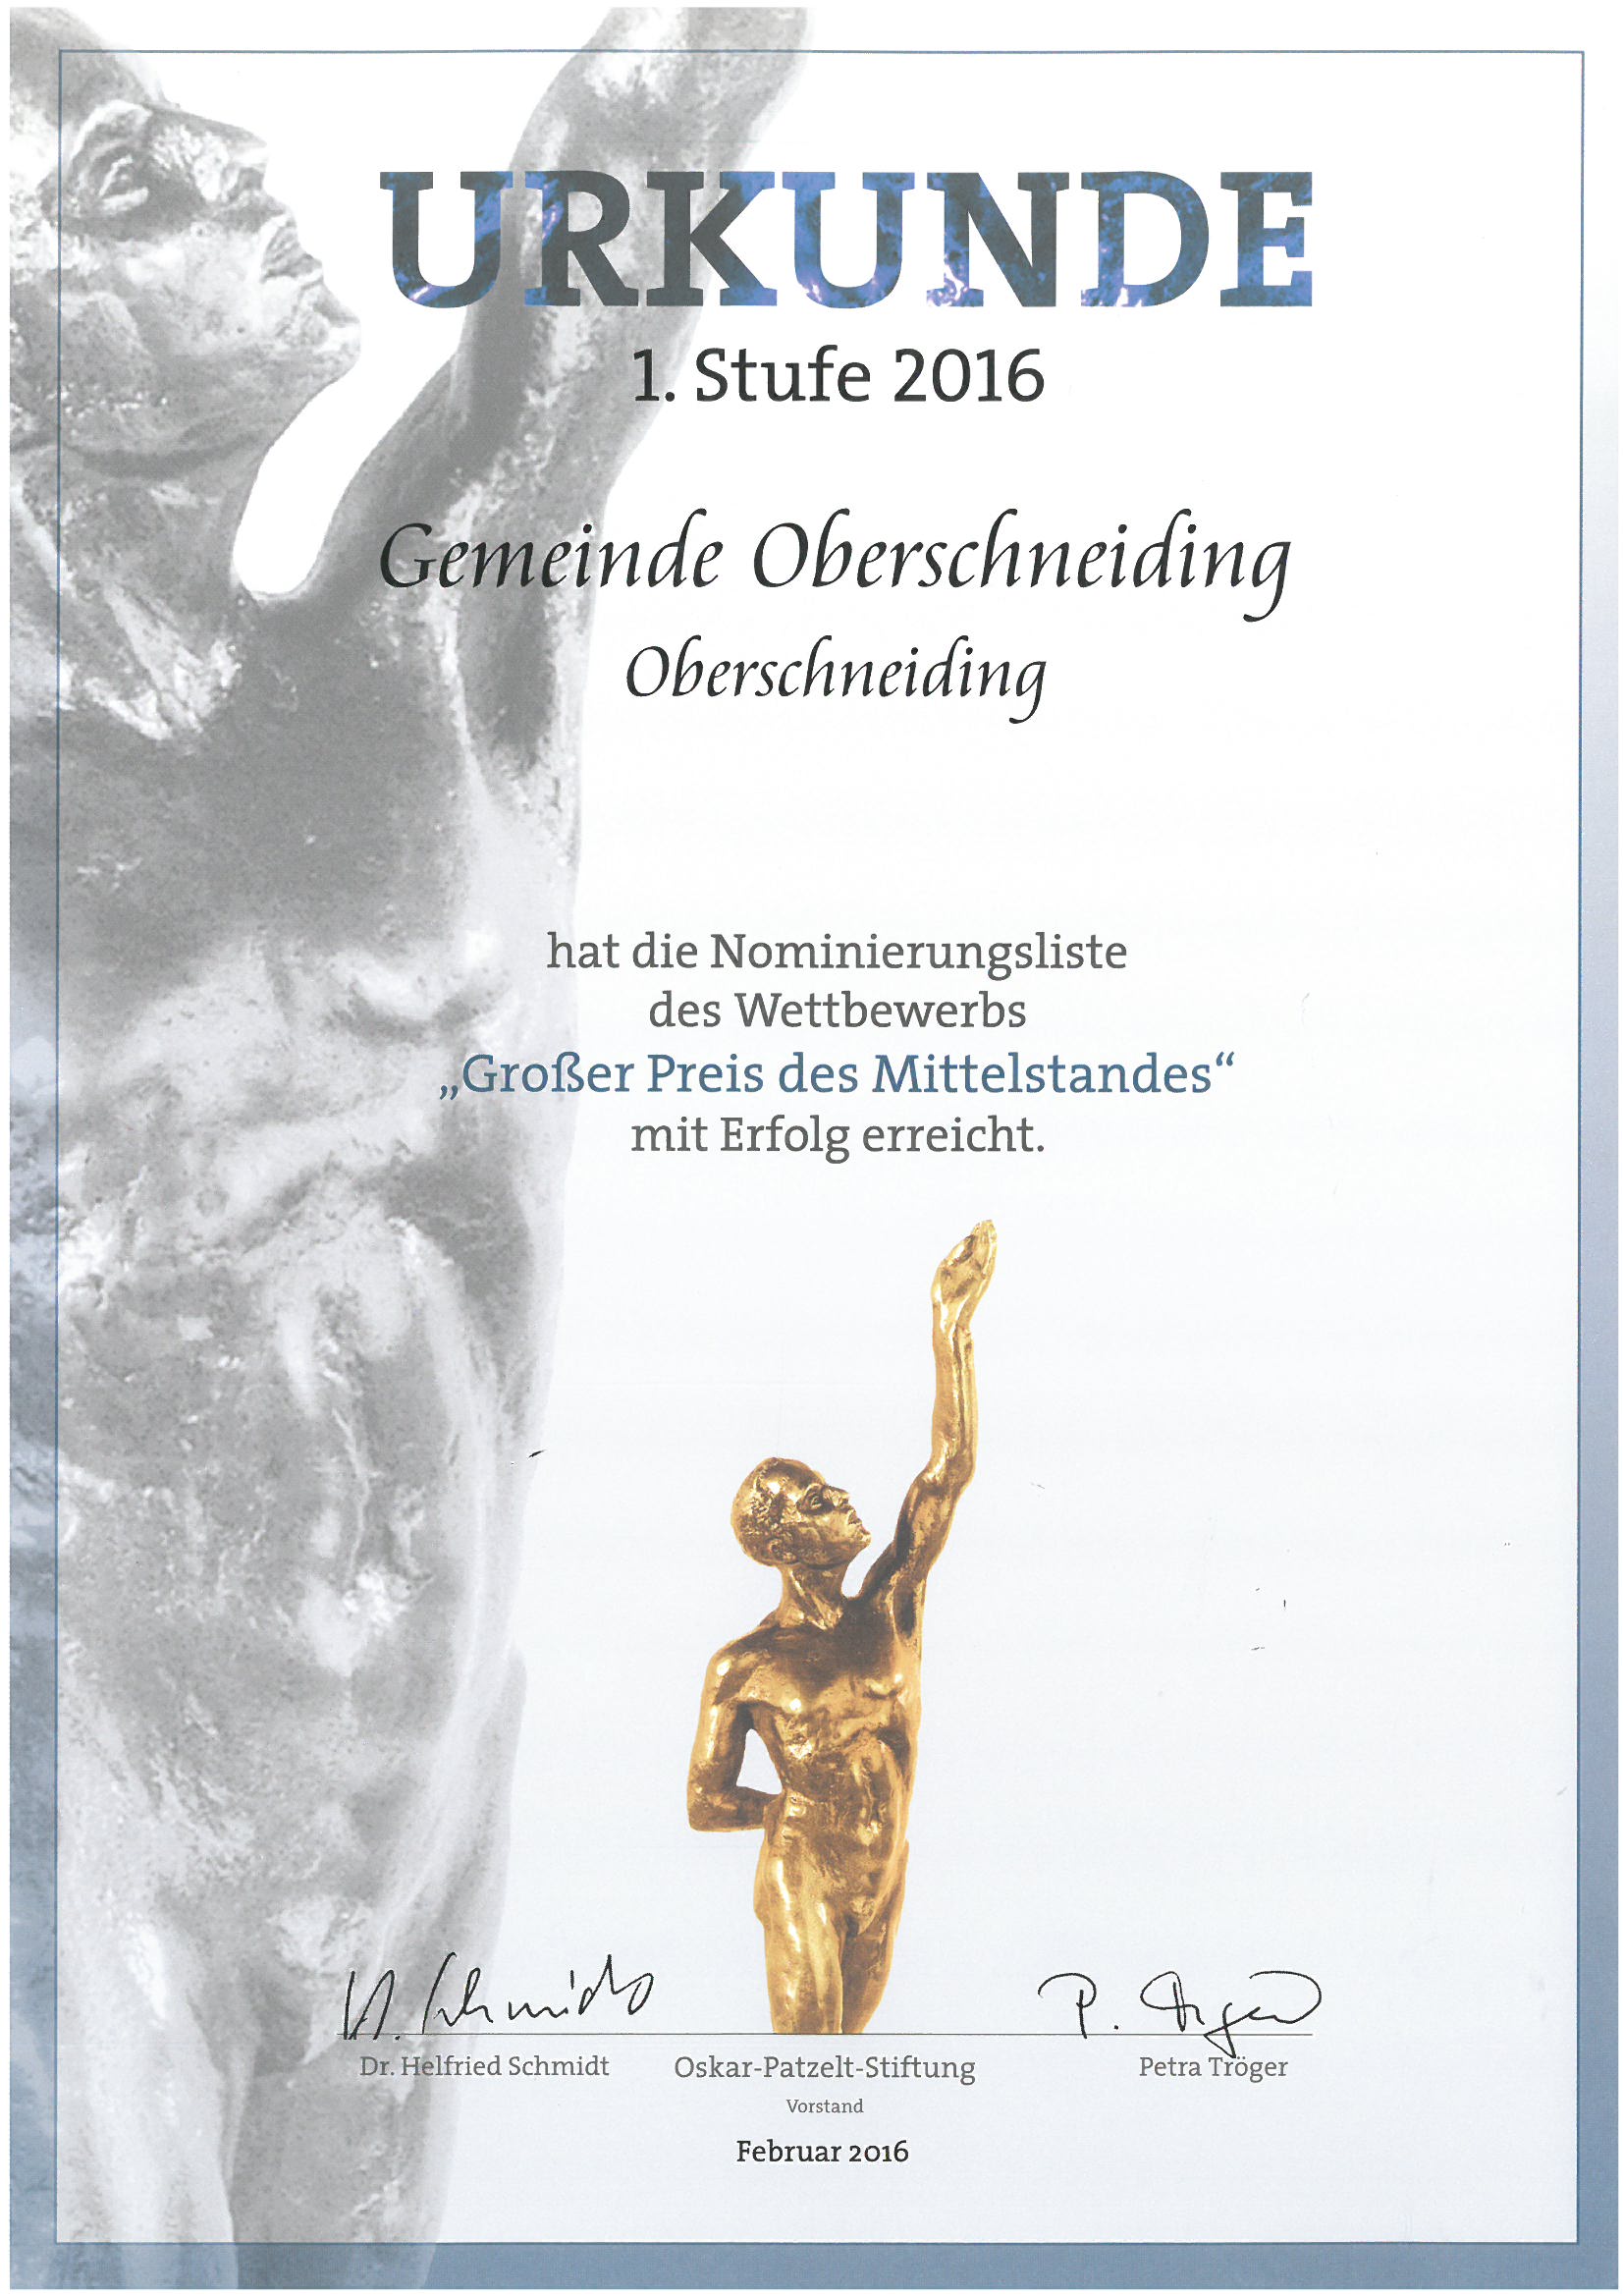 2016 03 14 Urkunde Großer Preis Mittelstand